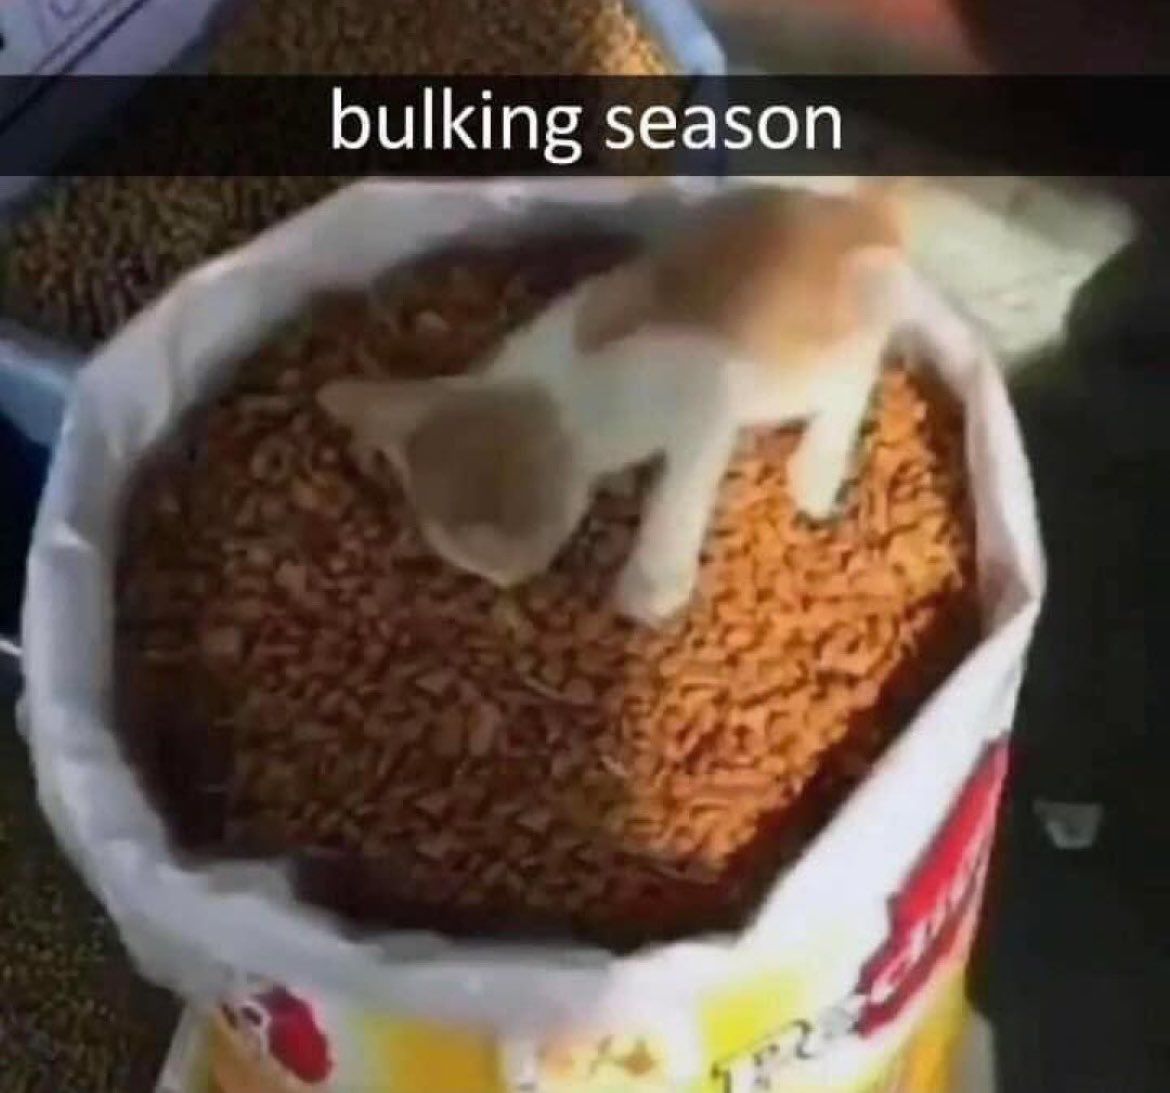 bulking season
***